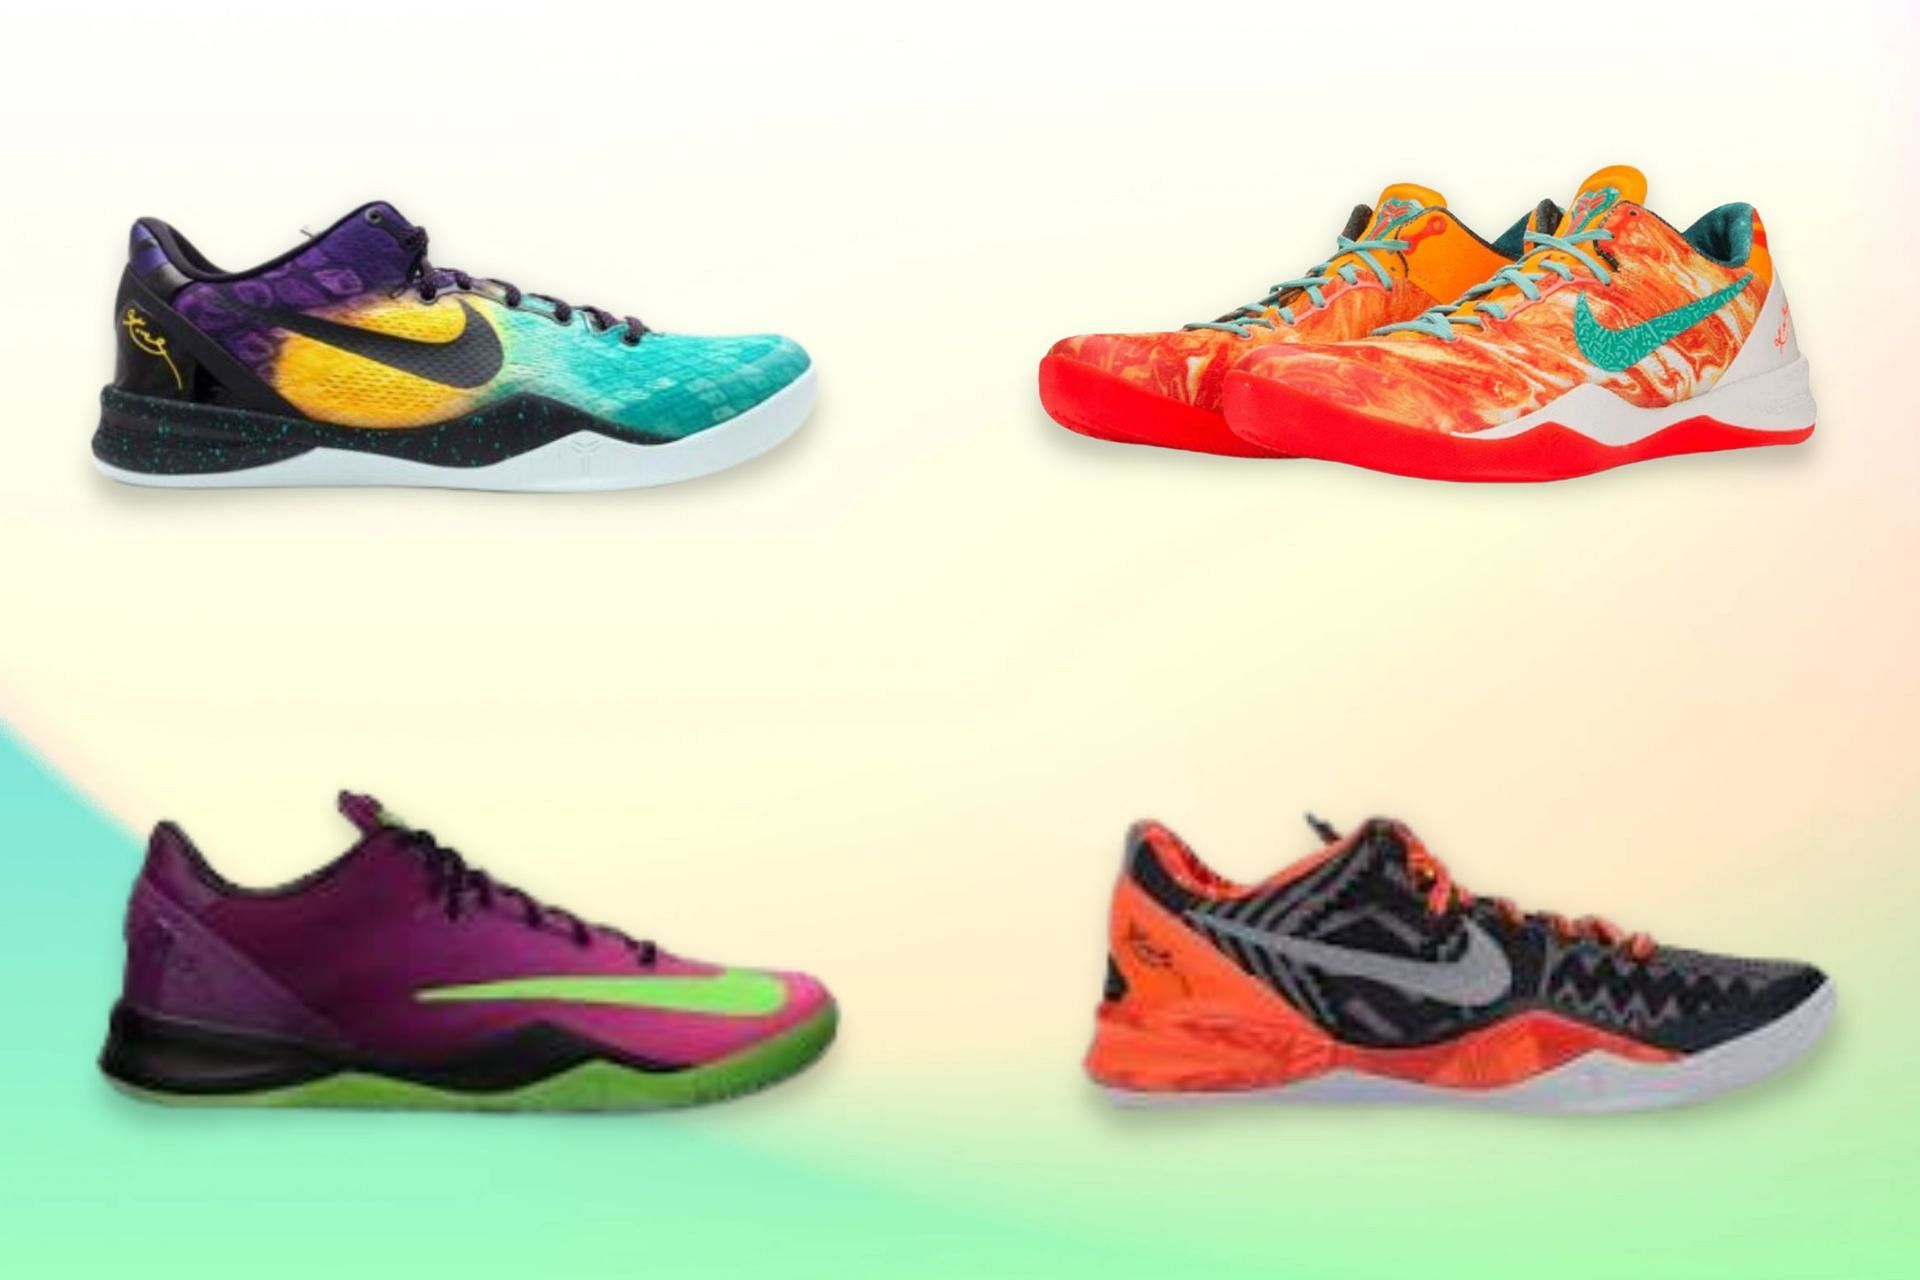 Devin Booker Wears Nike Kobe 4 Sneakers in NBA 2K23 Trailer - Sports  Illustrated FanNation Kicks News, Analysis and More